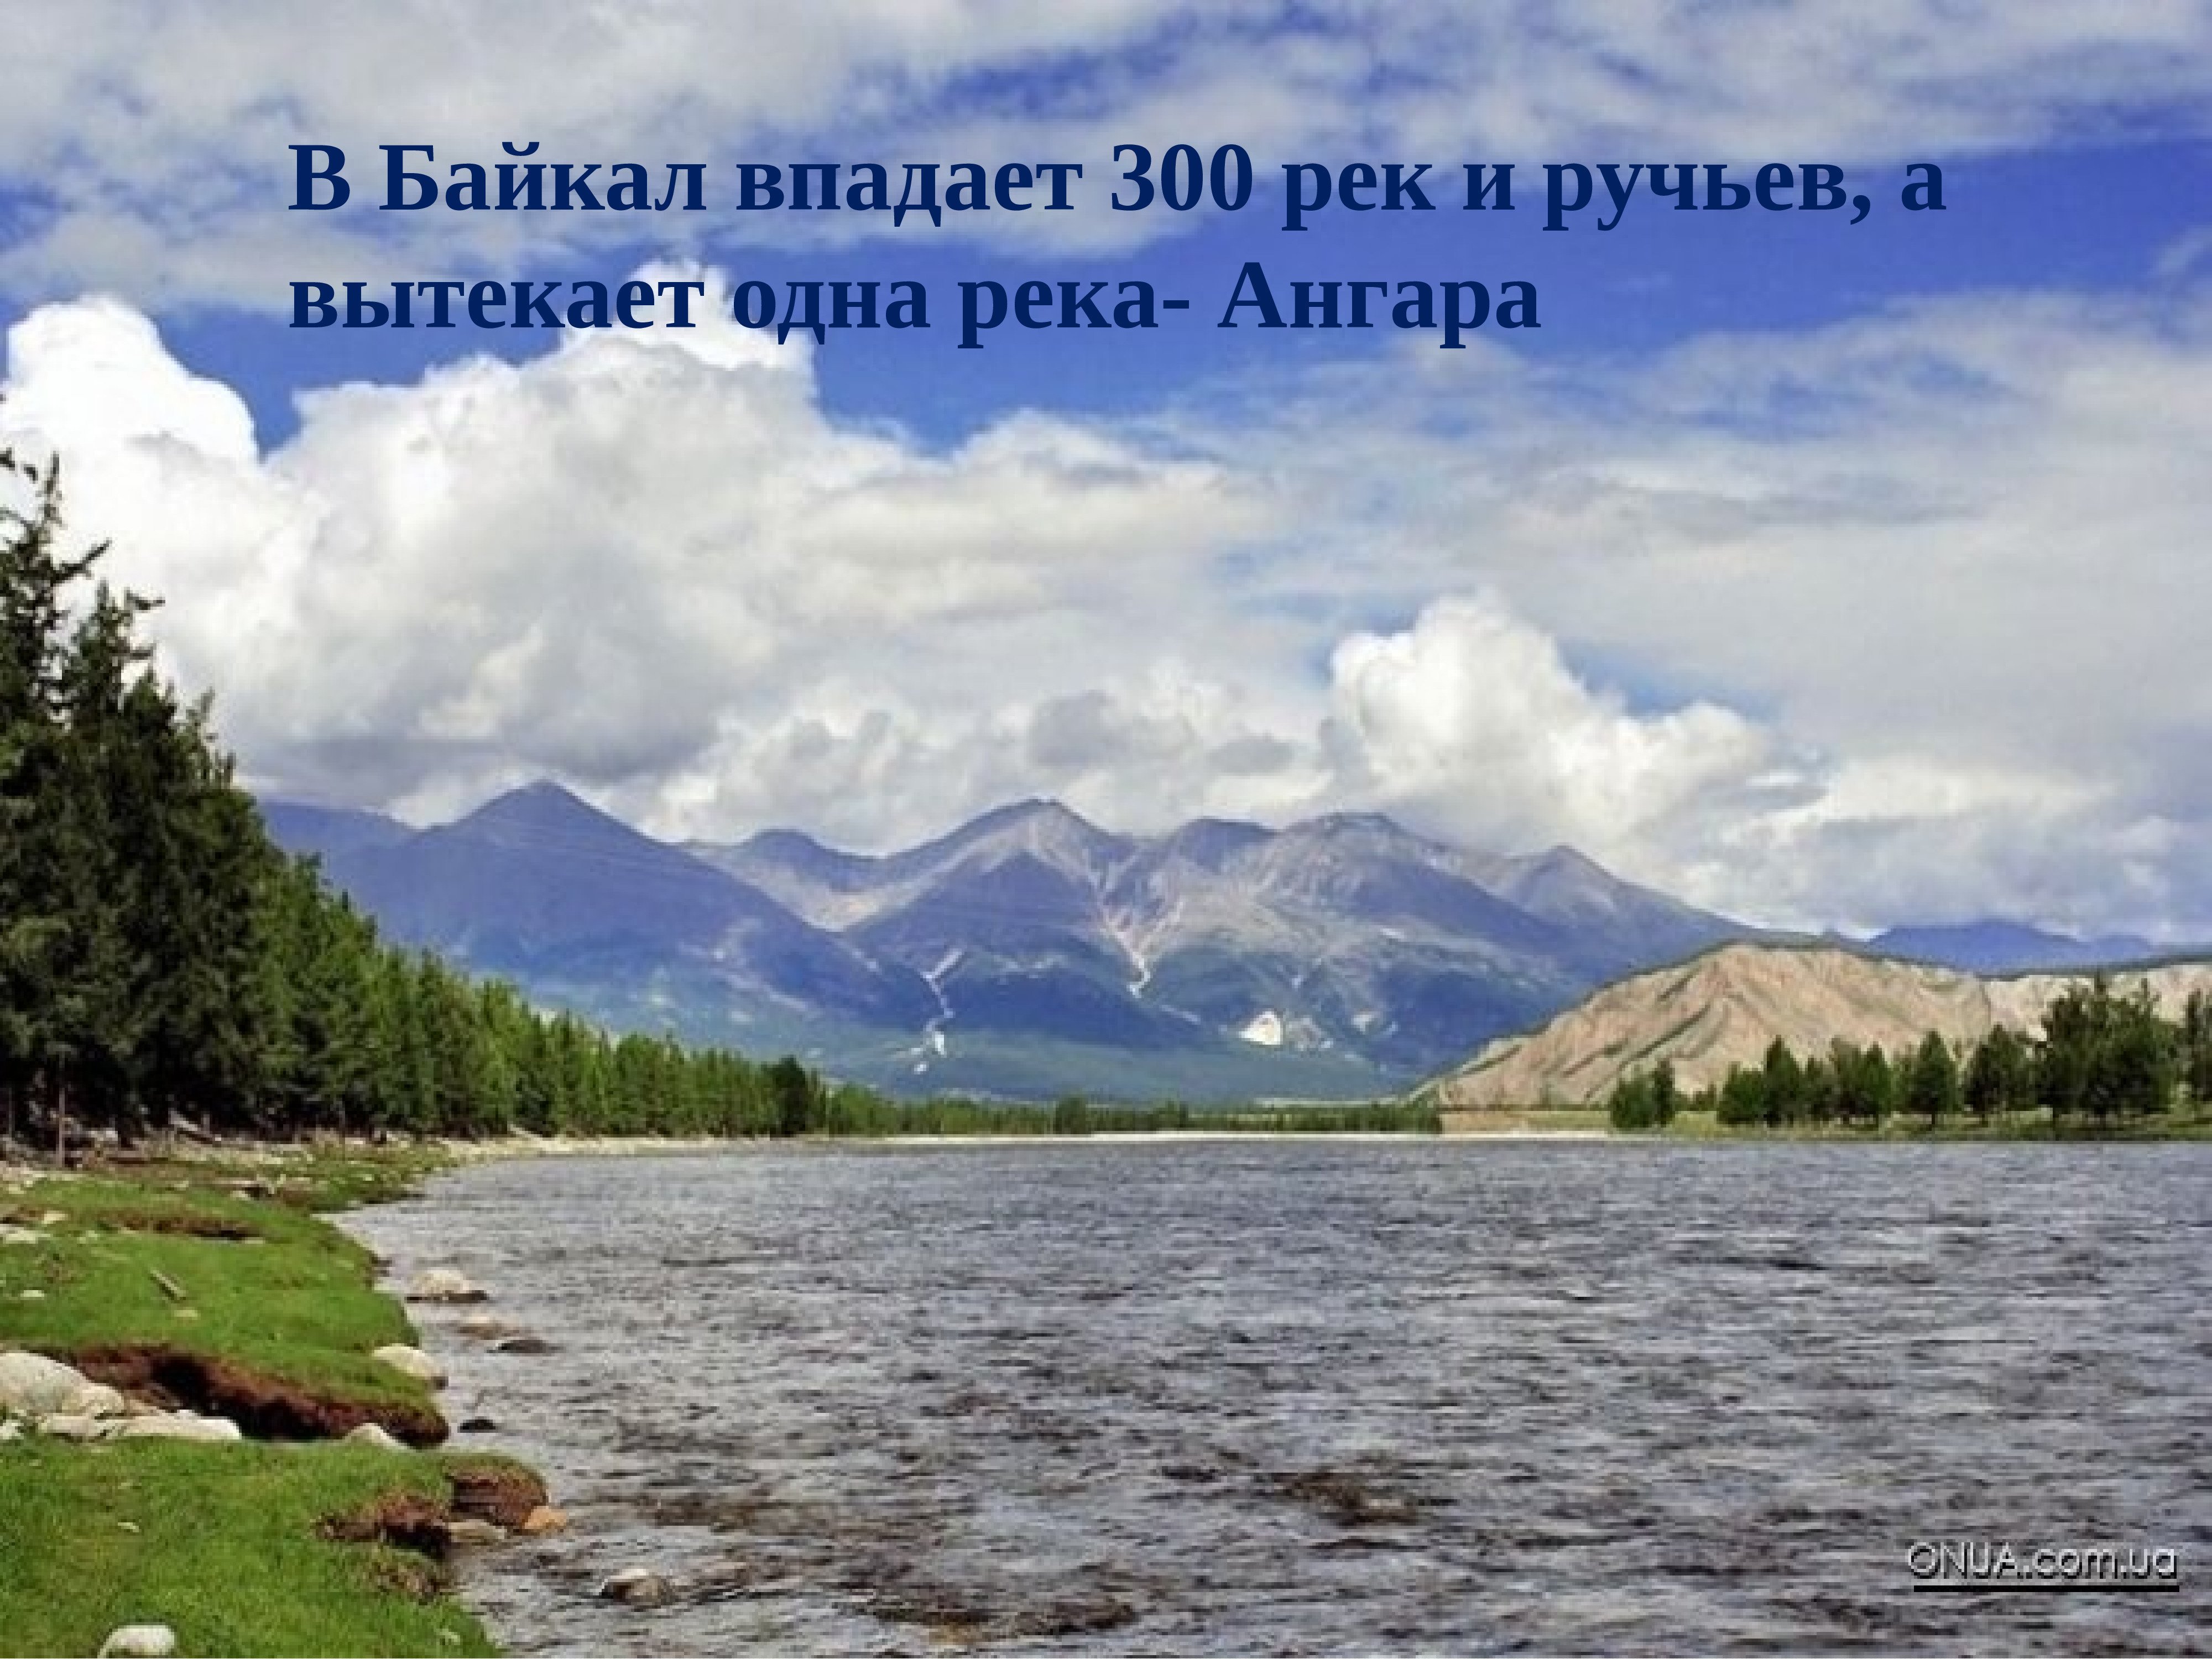 Озера гор южной сибири. Красота озера Байкал. Республика Алтай озеро Байкал. Байкал озеро Евразии. Озеро Байкал фото.